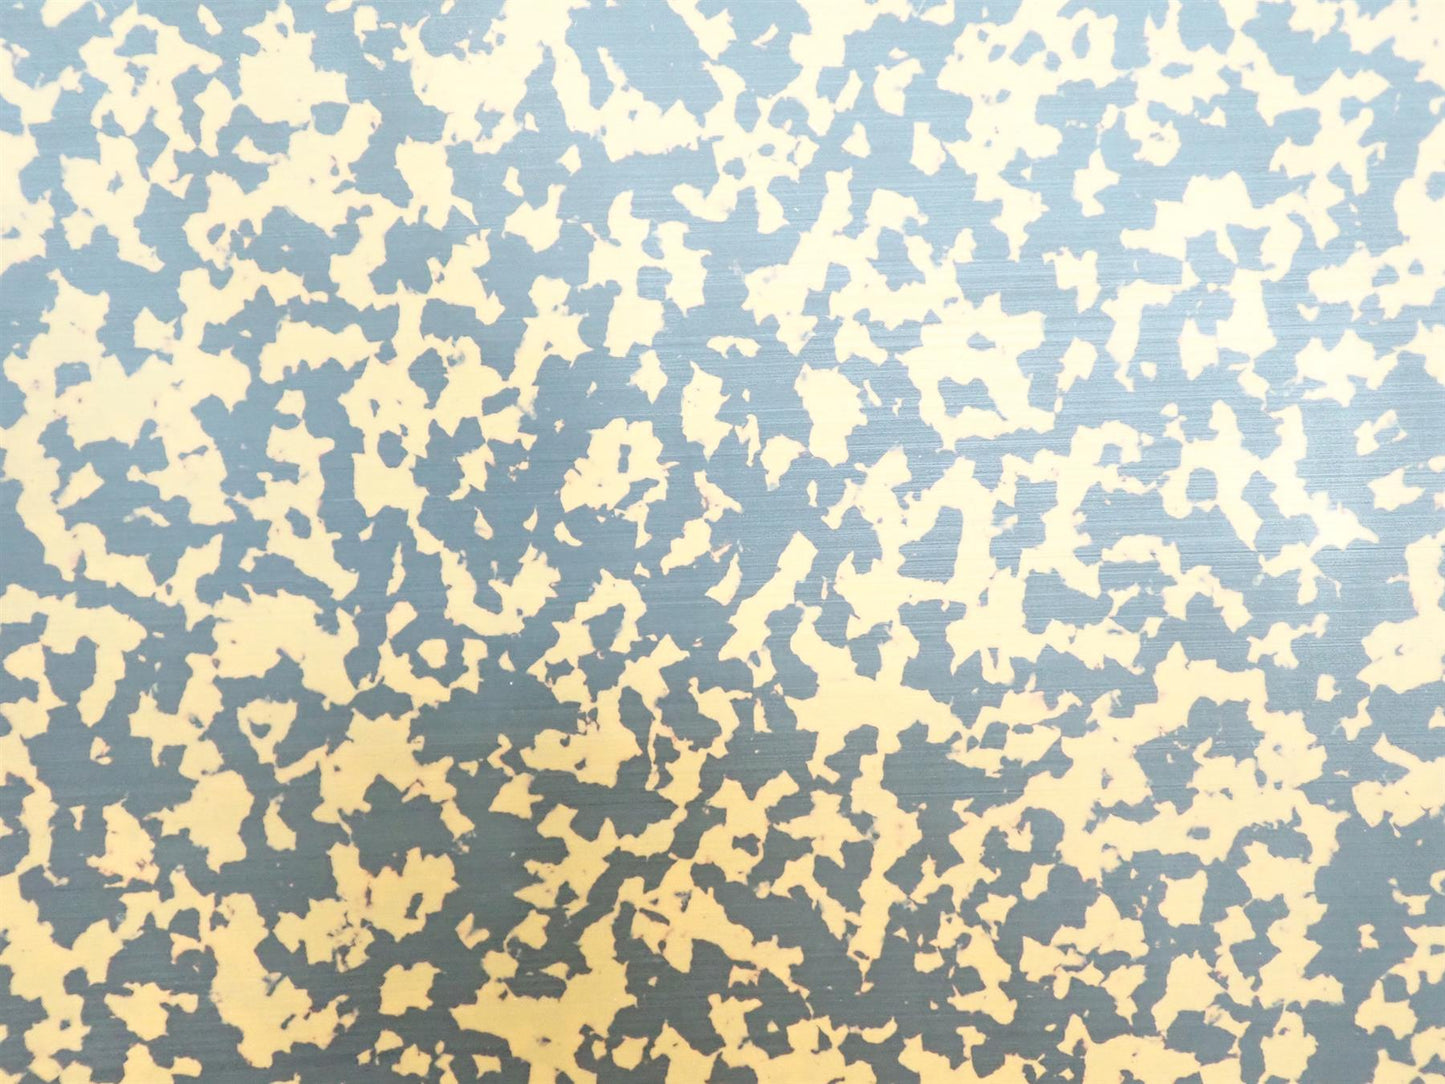 Incudo Amber Spotted Tortoiseshell Celluloid Veneer / Wrap - 1600x700x0.17mm (63x27.56x0.007")